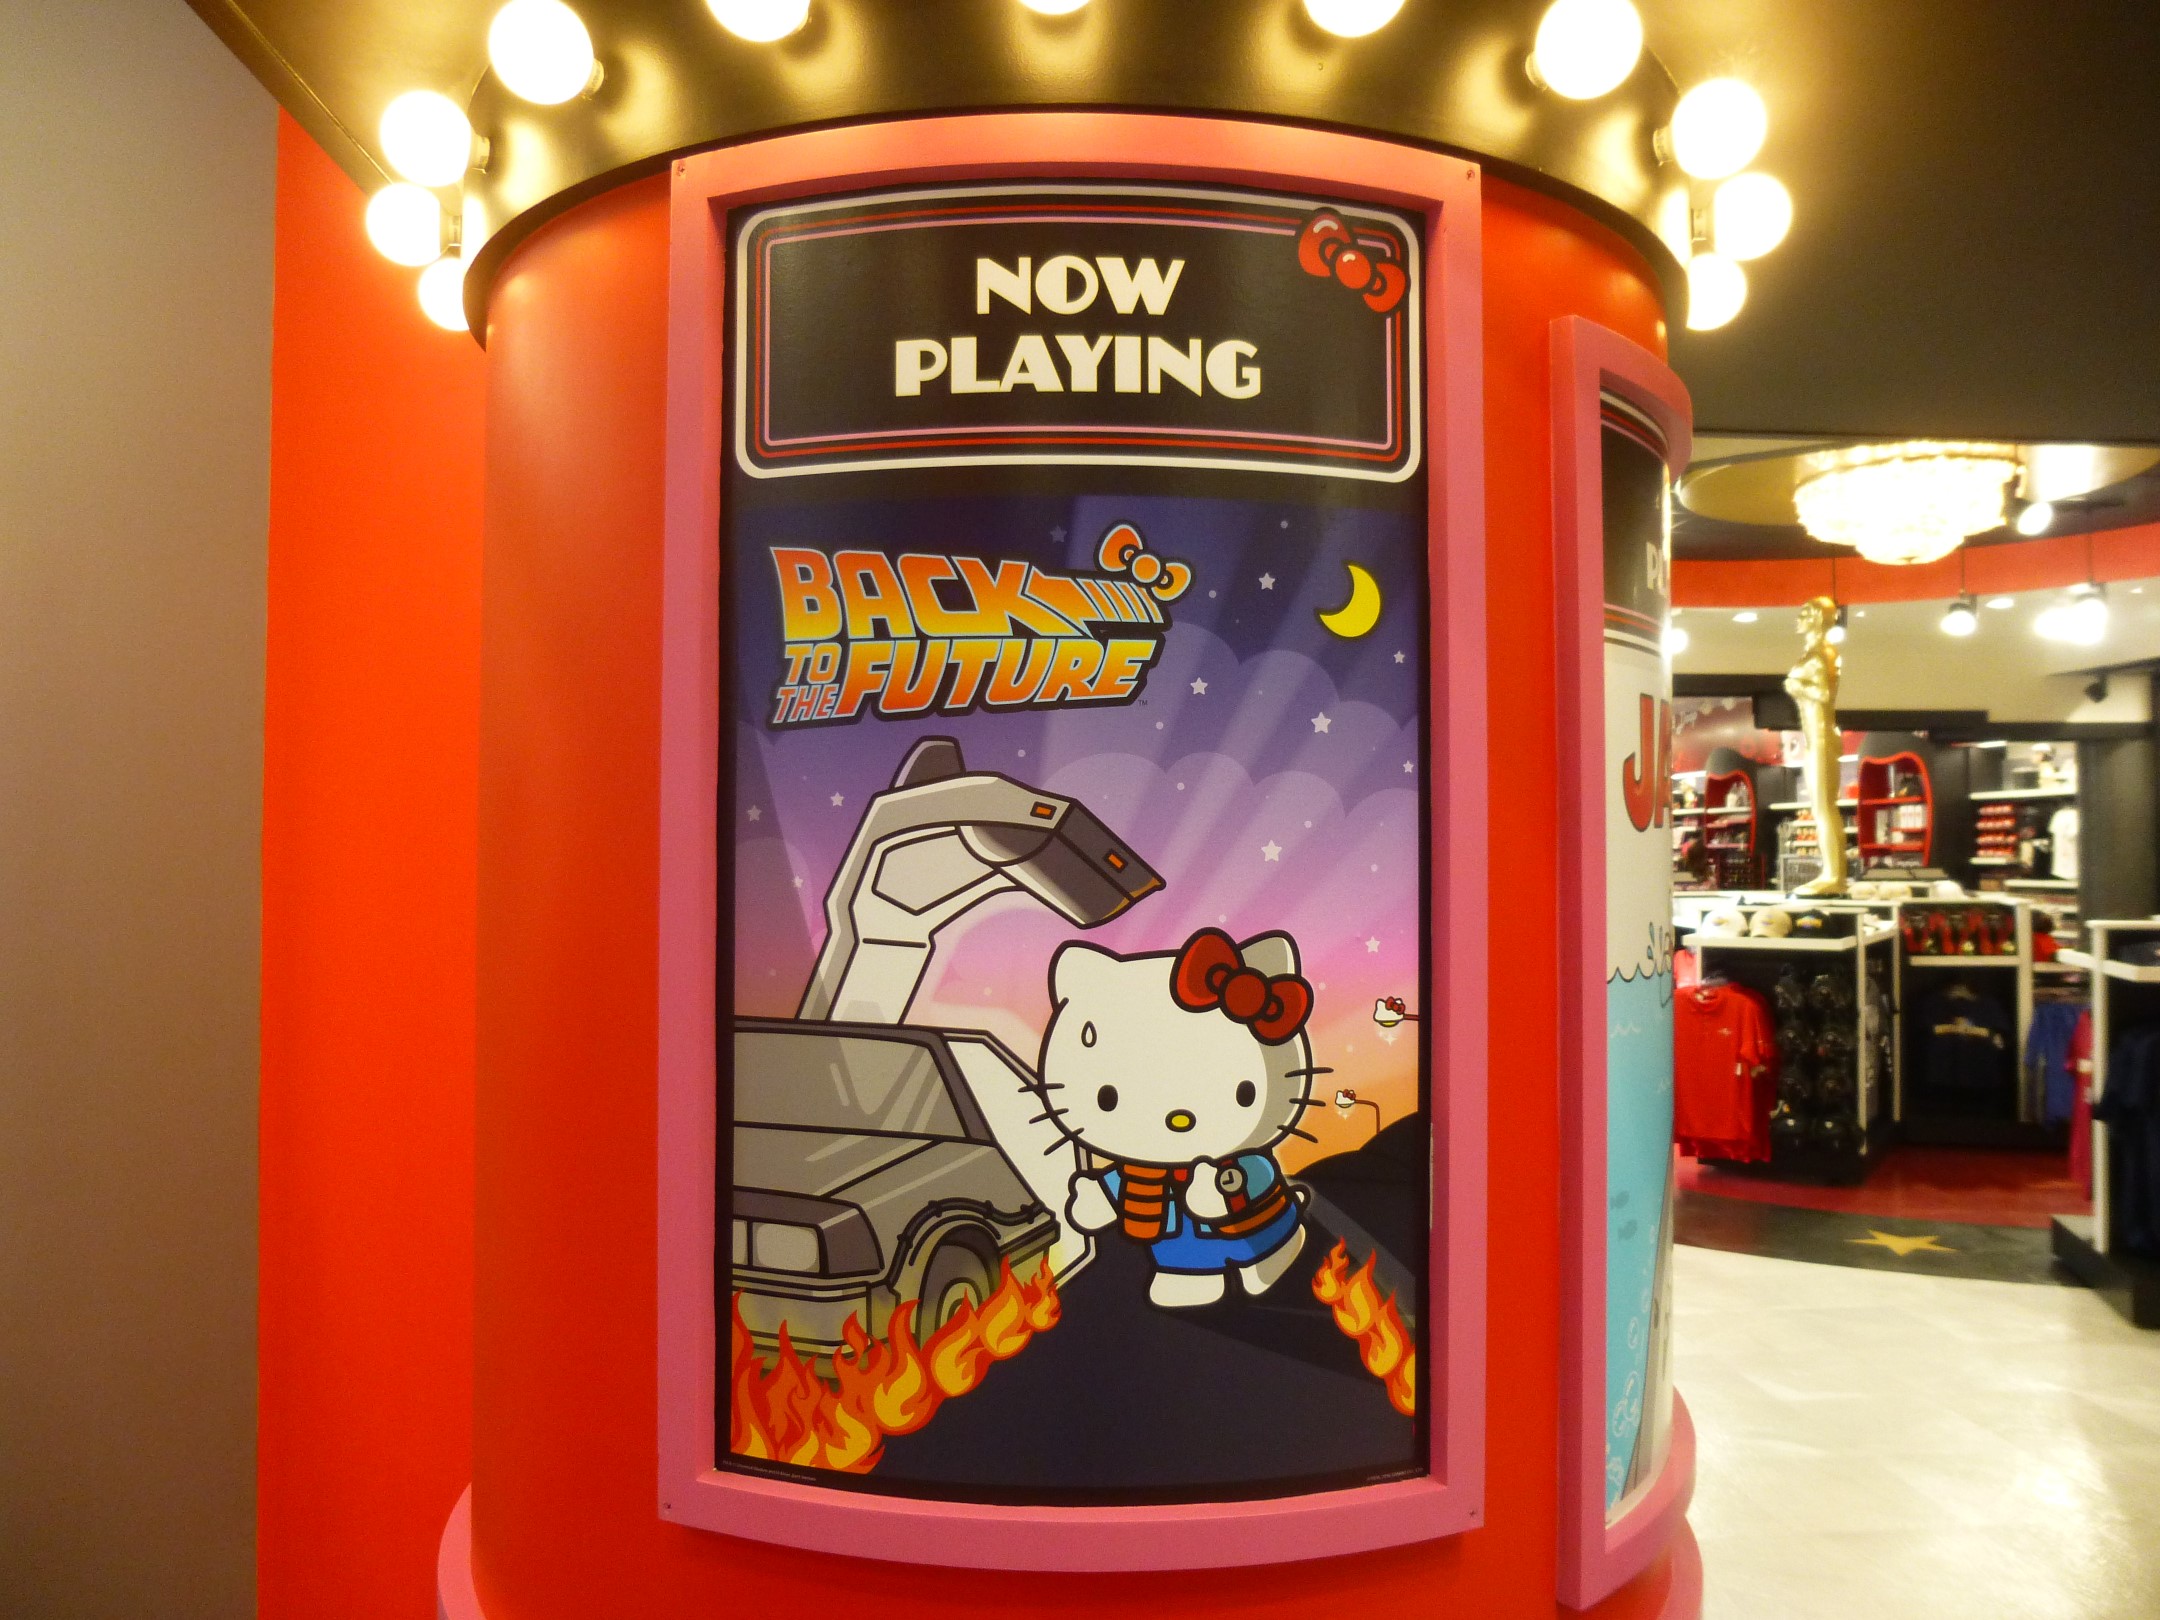 Hello Kitty Store Opens at Universal Studios Florida – Orlando ParkStop